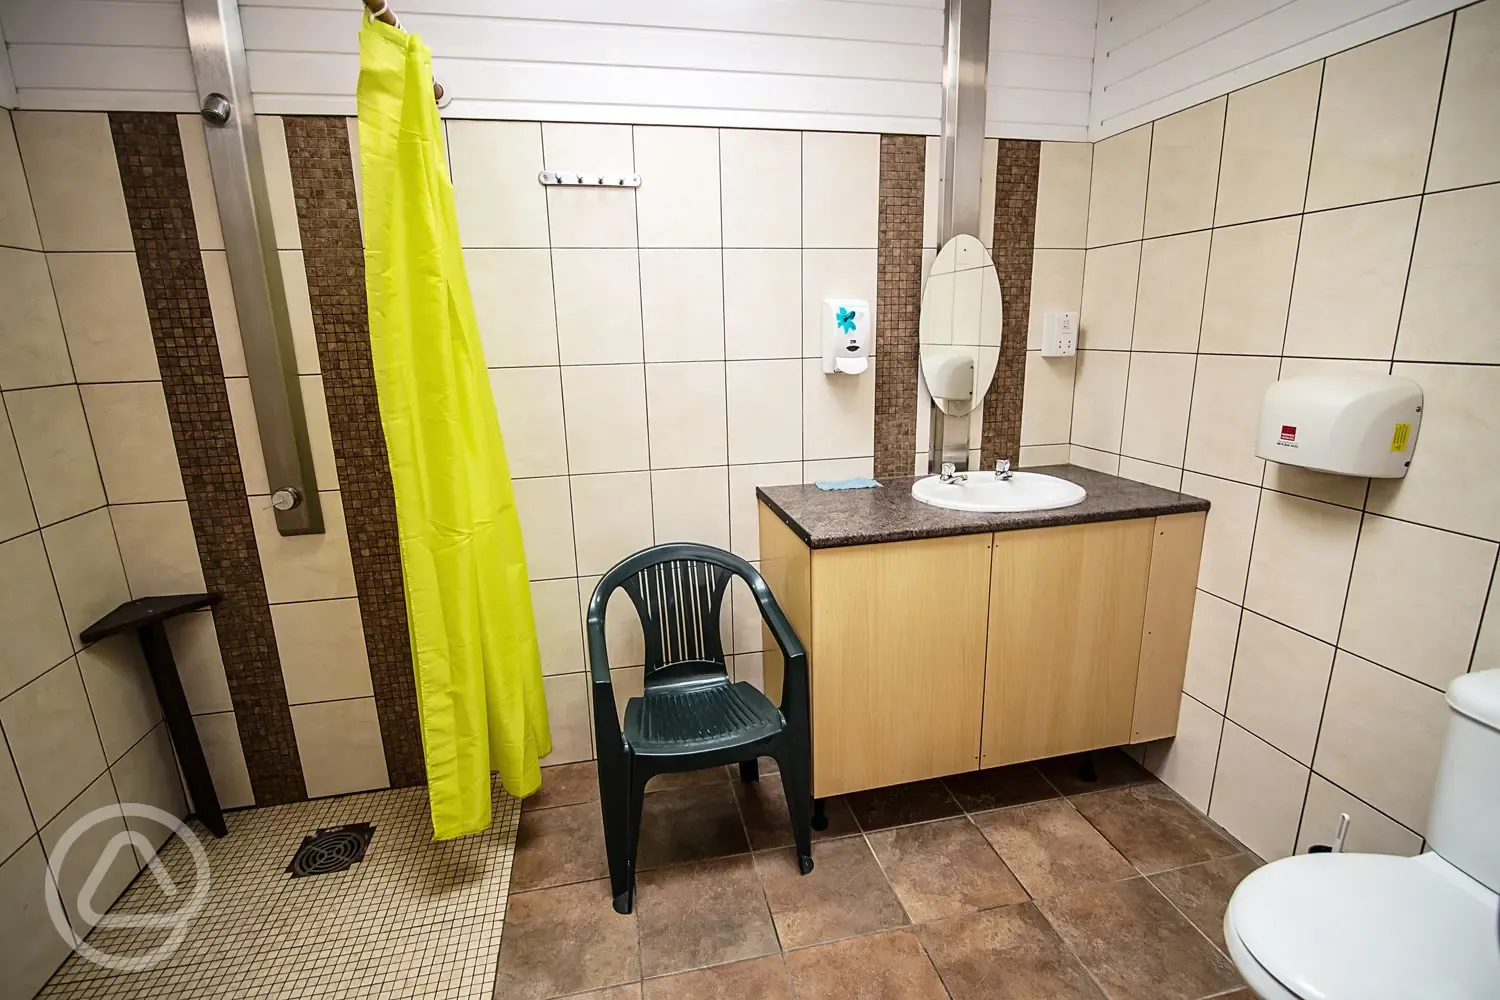 Bathroom facilities at Newberry Valley Park